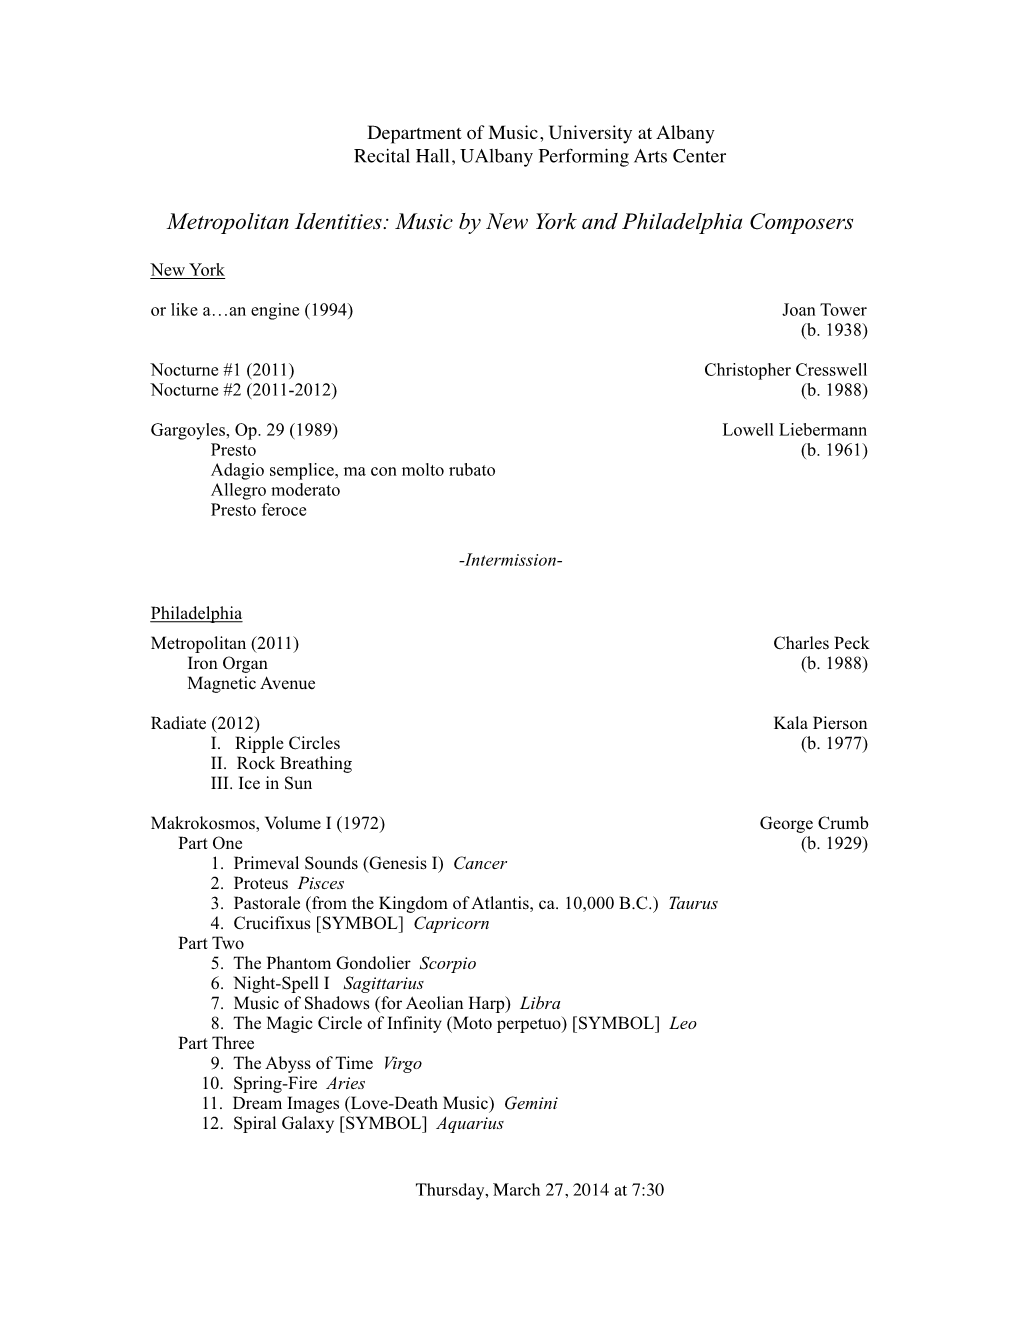 Roadfeldt-University of Albany Program-March 2014 Copy